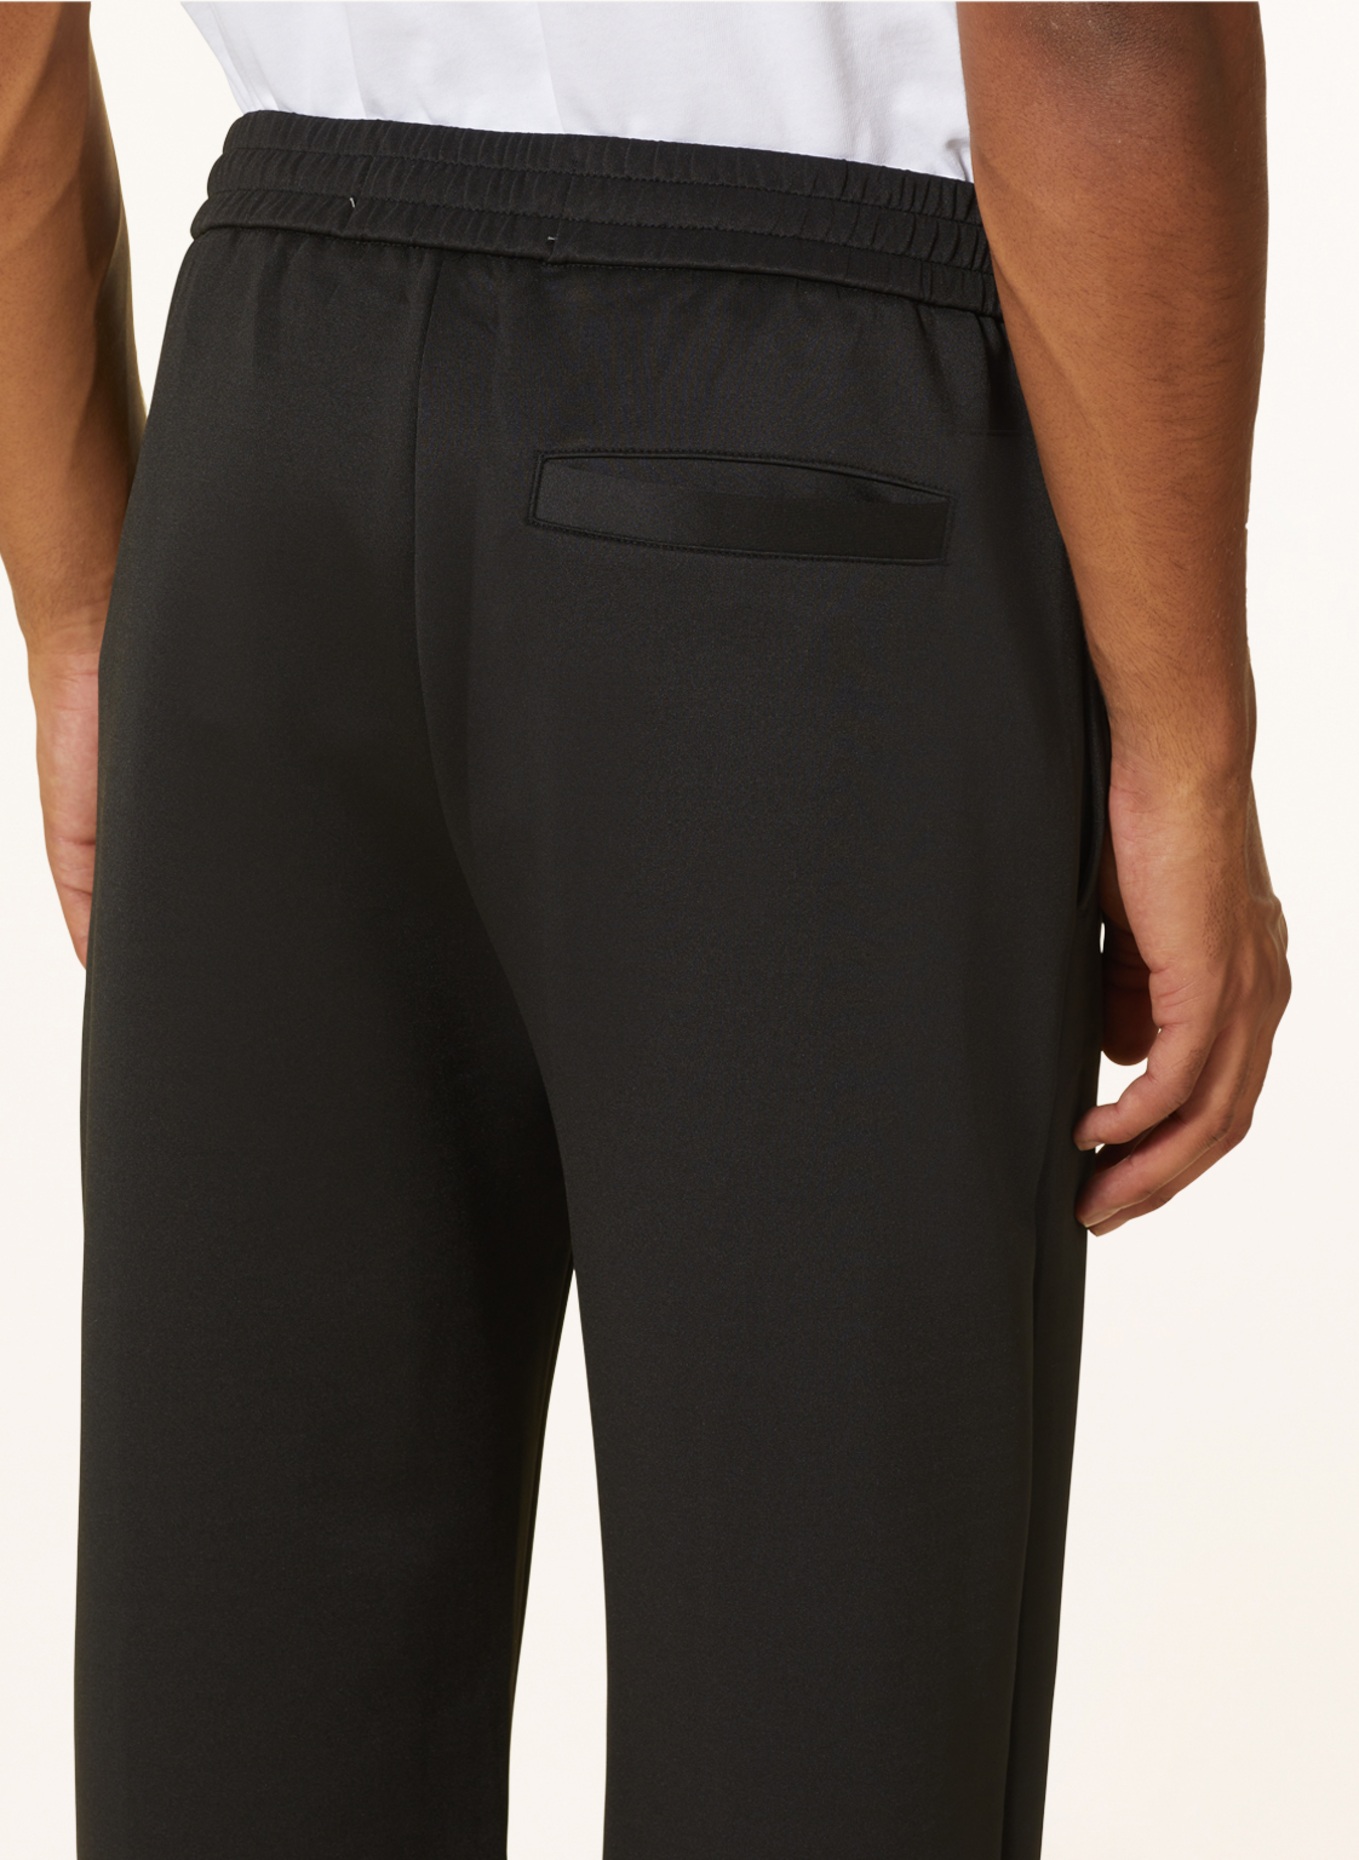 THE NEW ORIGINALS Track pants, Color: BLACK (Image 6)